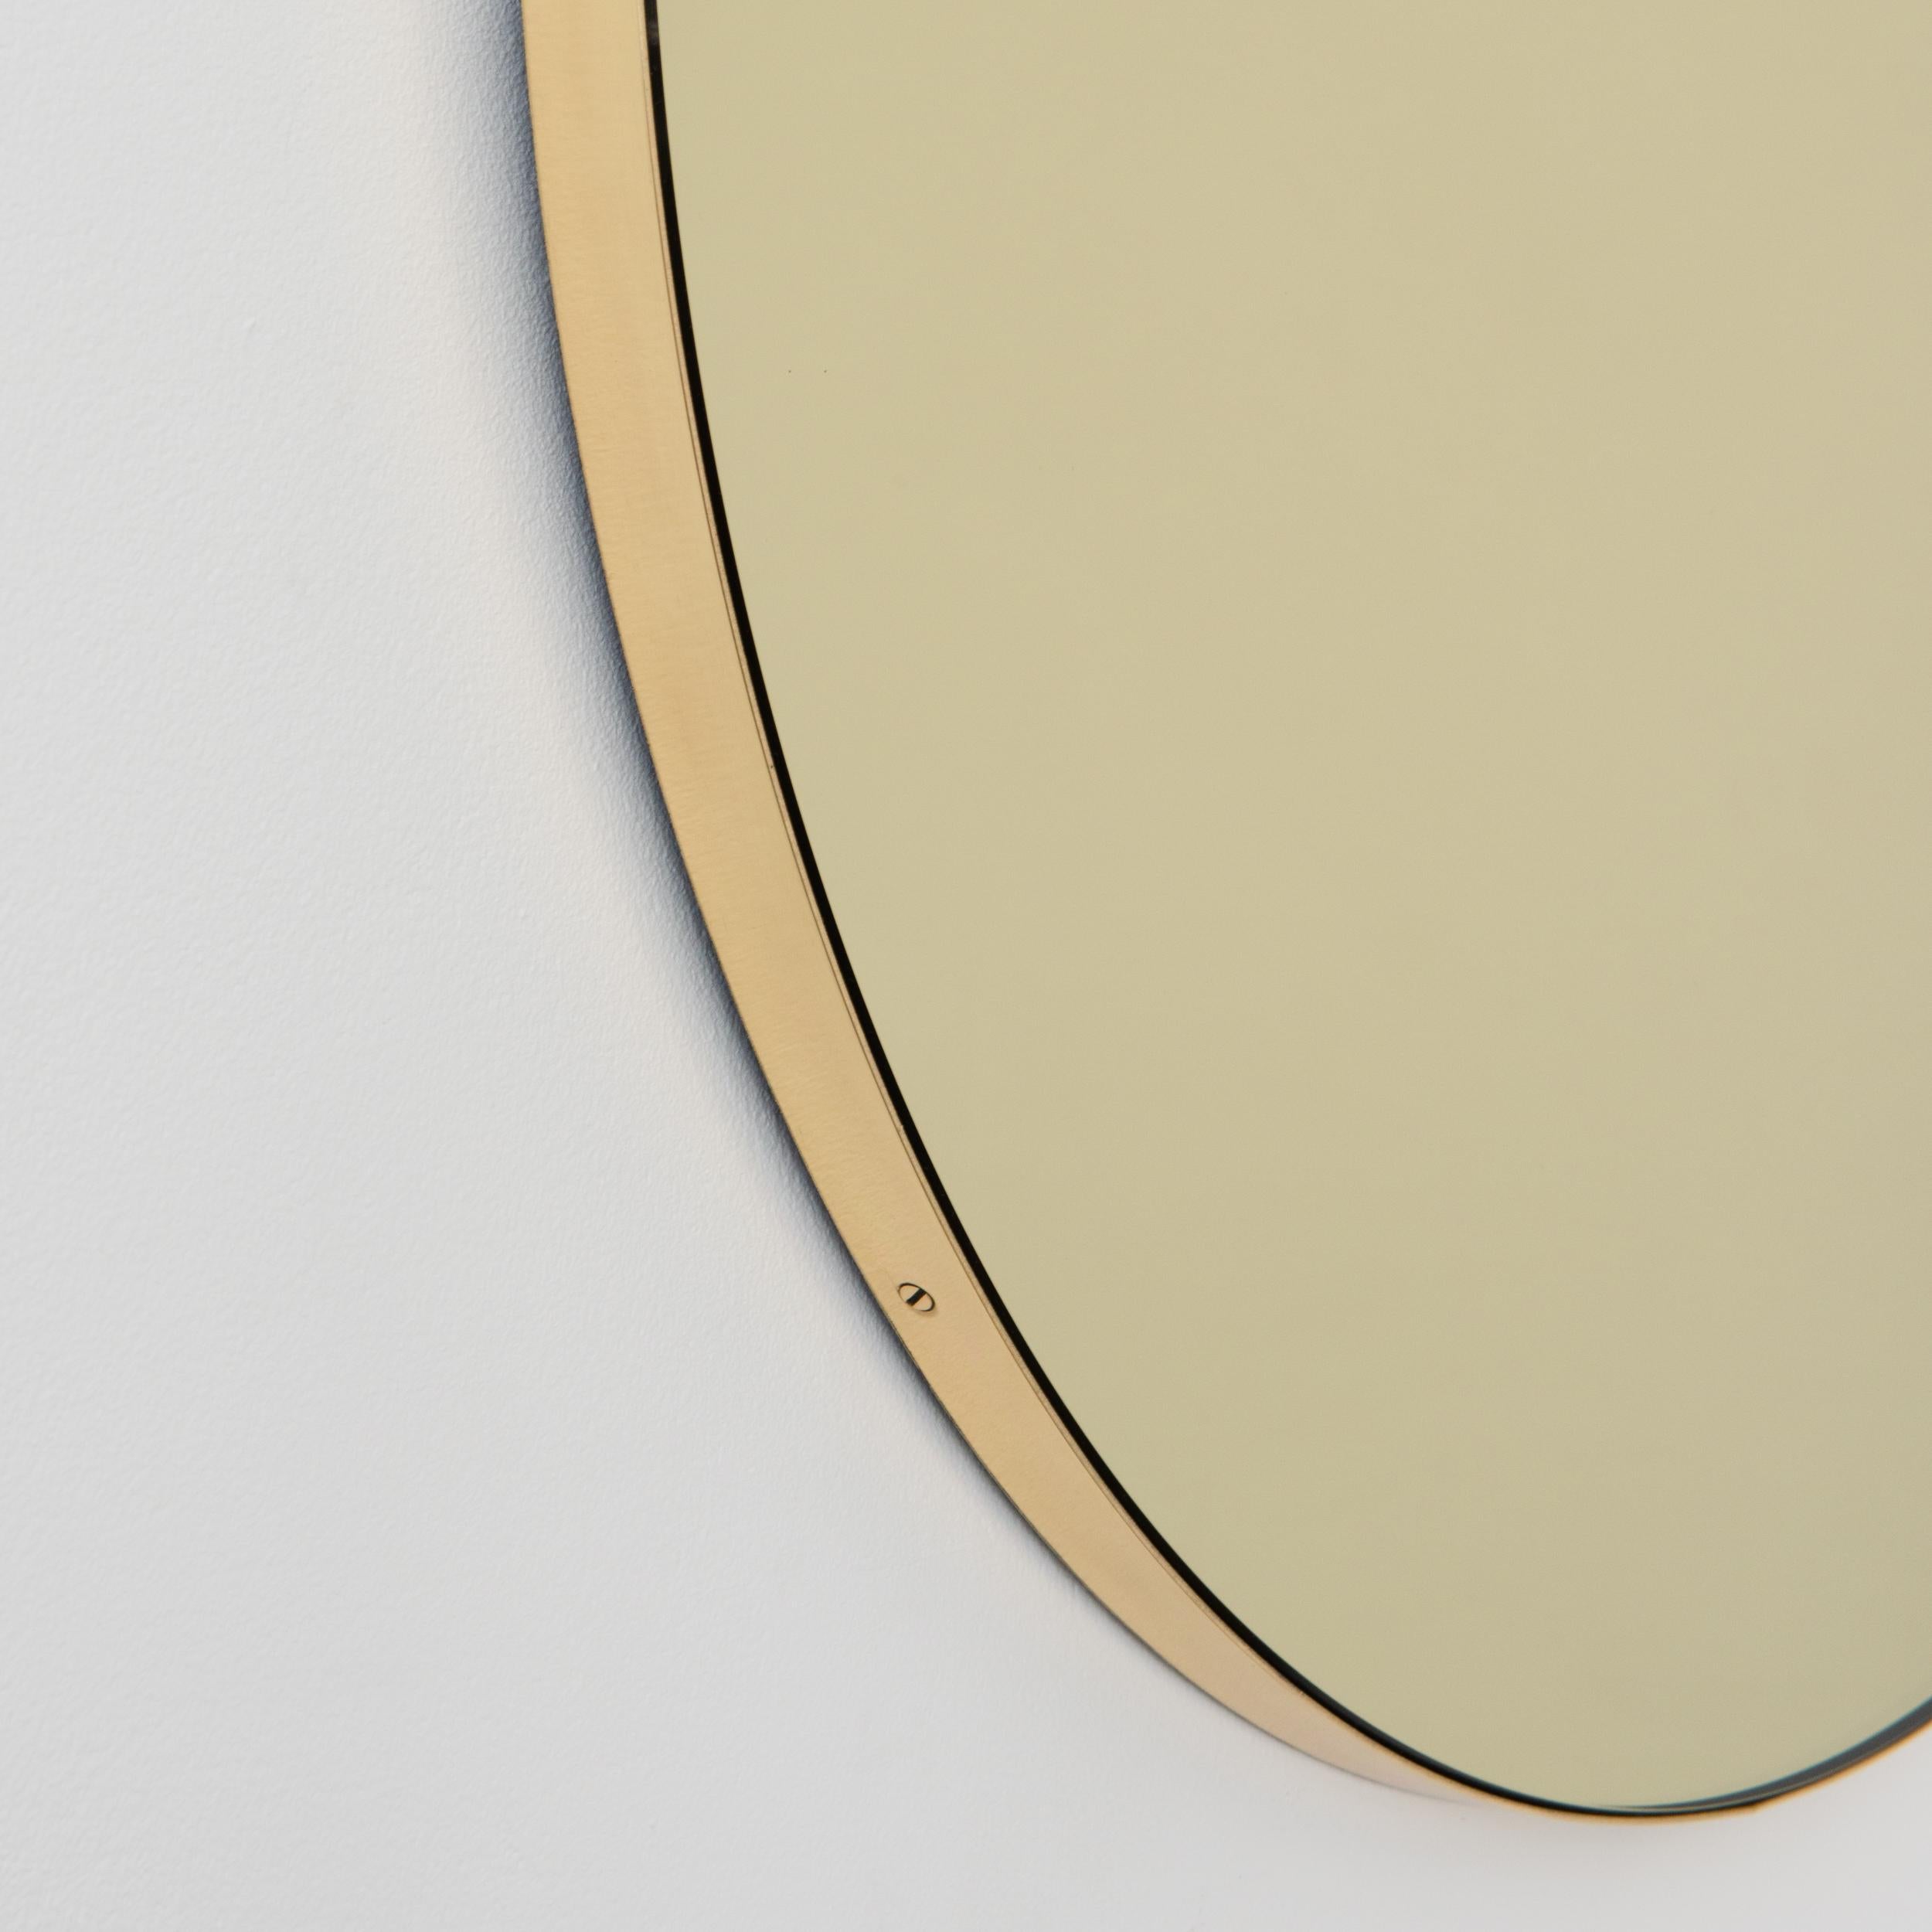 British In Stock Orbis Gold Tinted Round Contemporary Mirror, Brass Frame, Medium For Sale